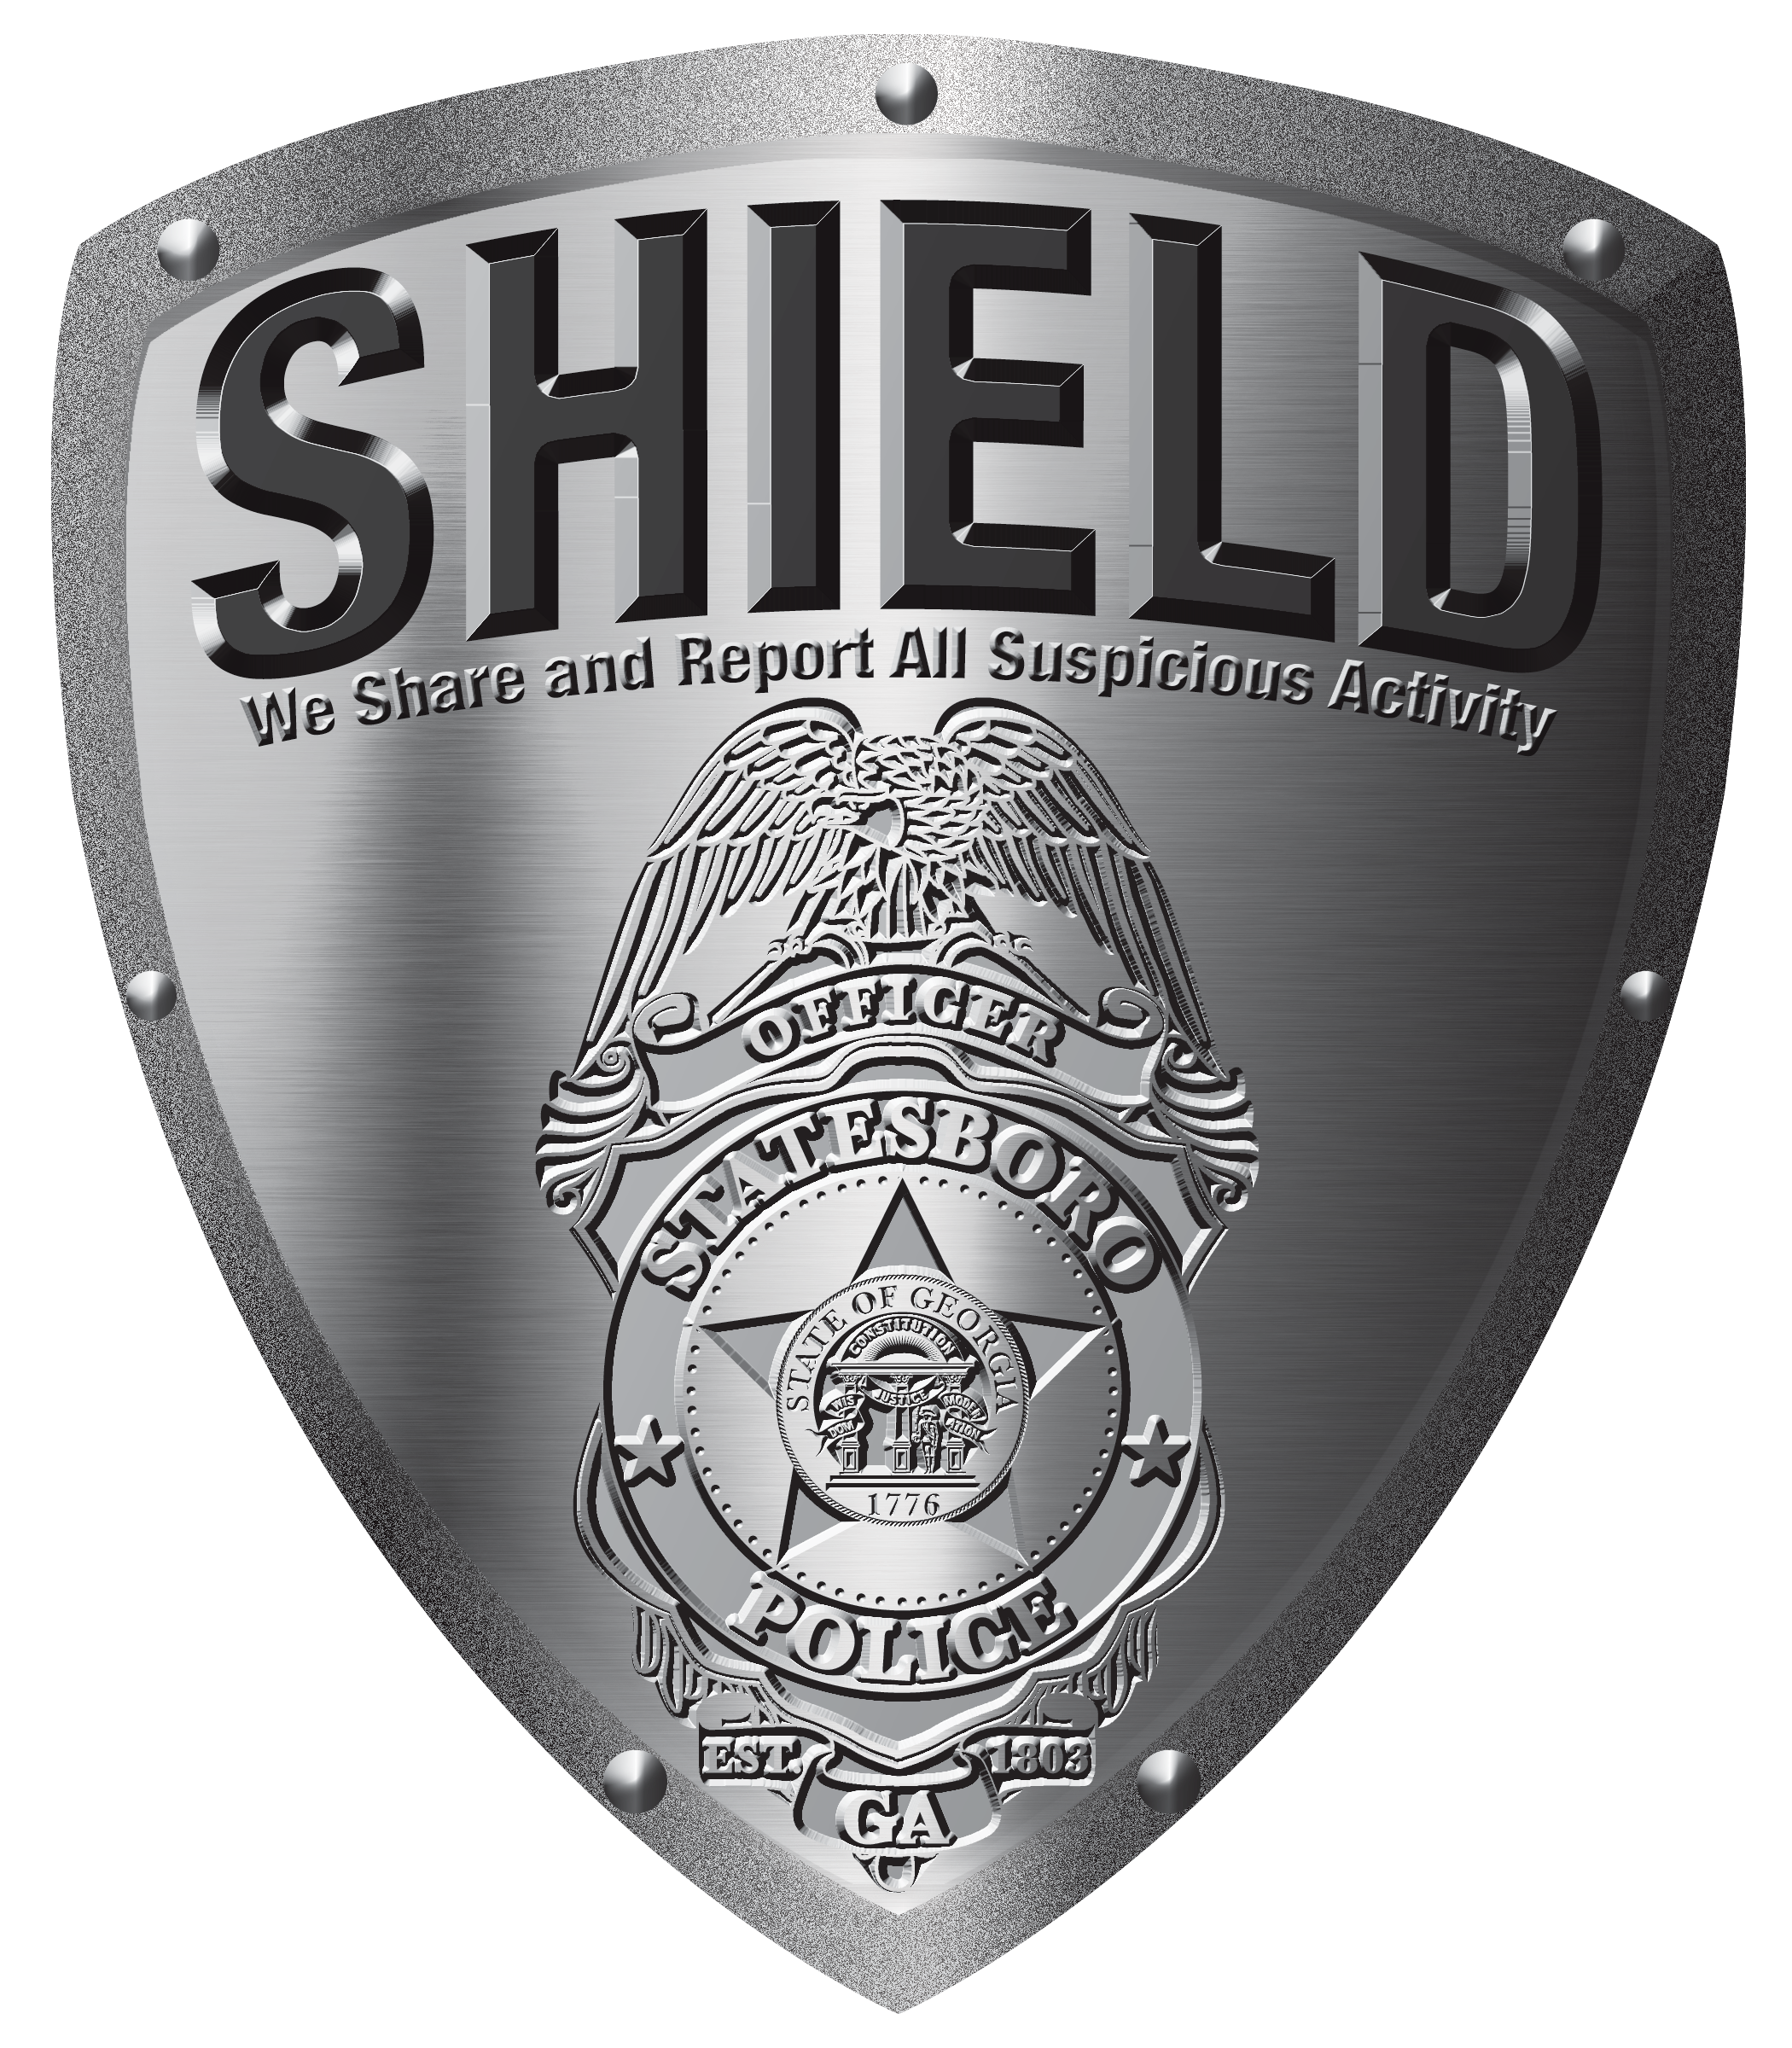 SHIELD - SPD Business Crime Prevention Program » City of Statesboro